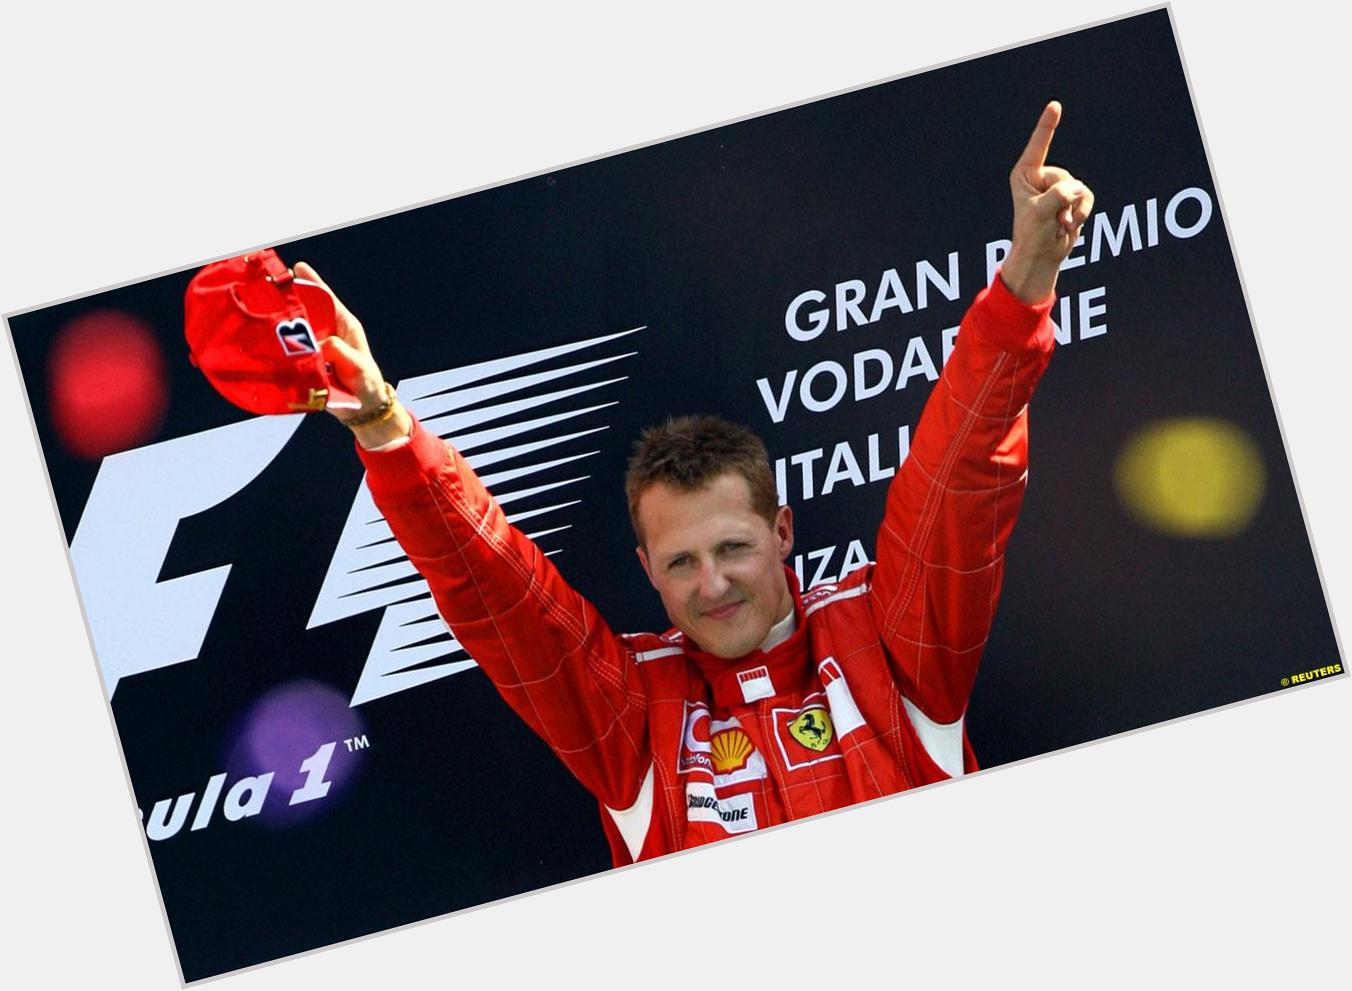 We wish Michael Schumacher a very happy birthday 